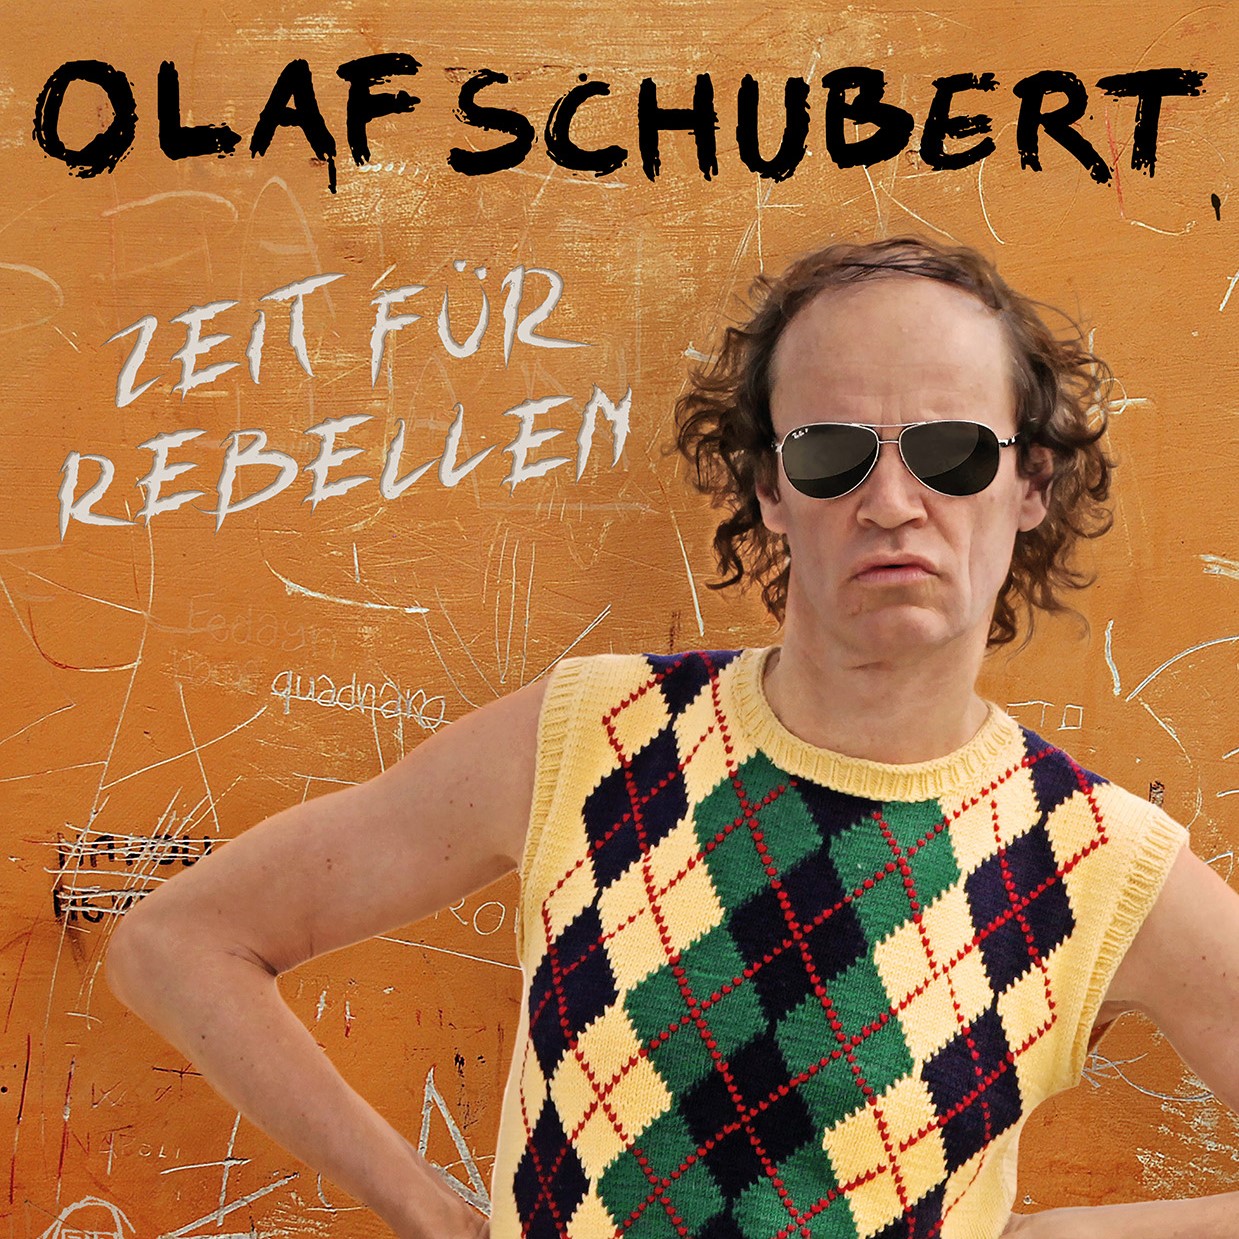 OLAF SCHUBERT